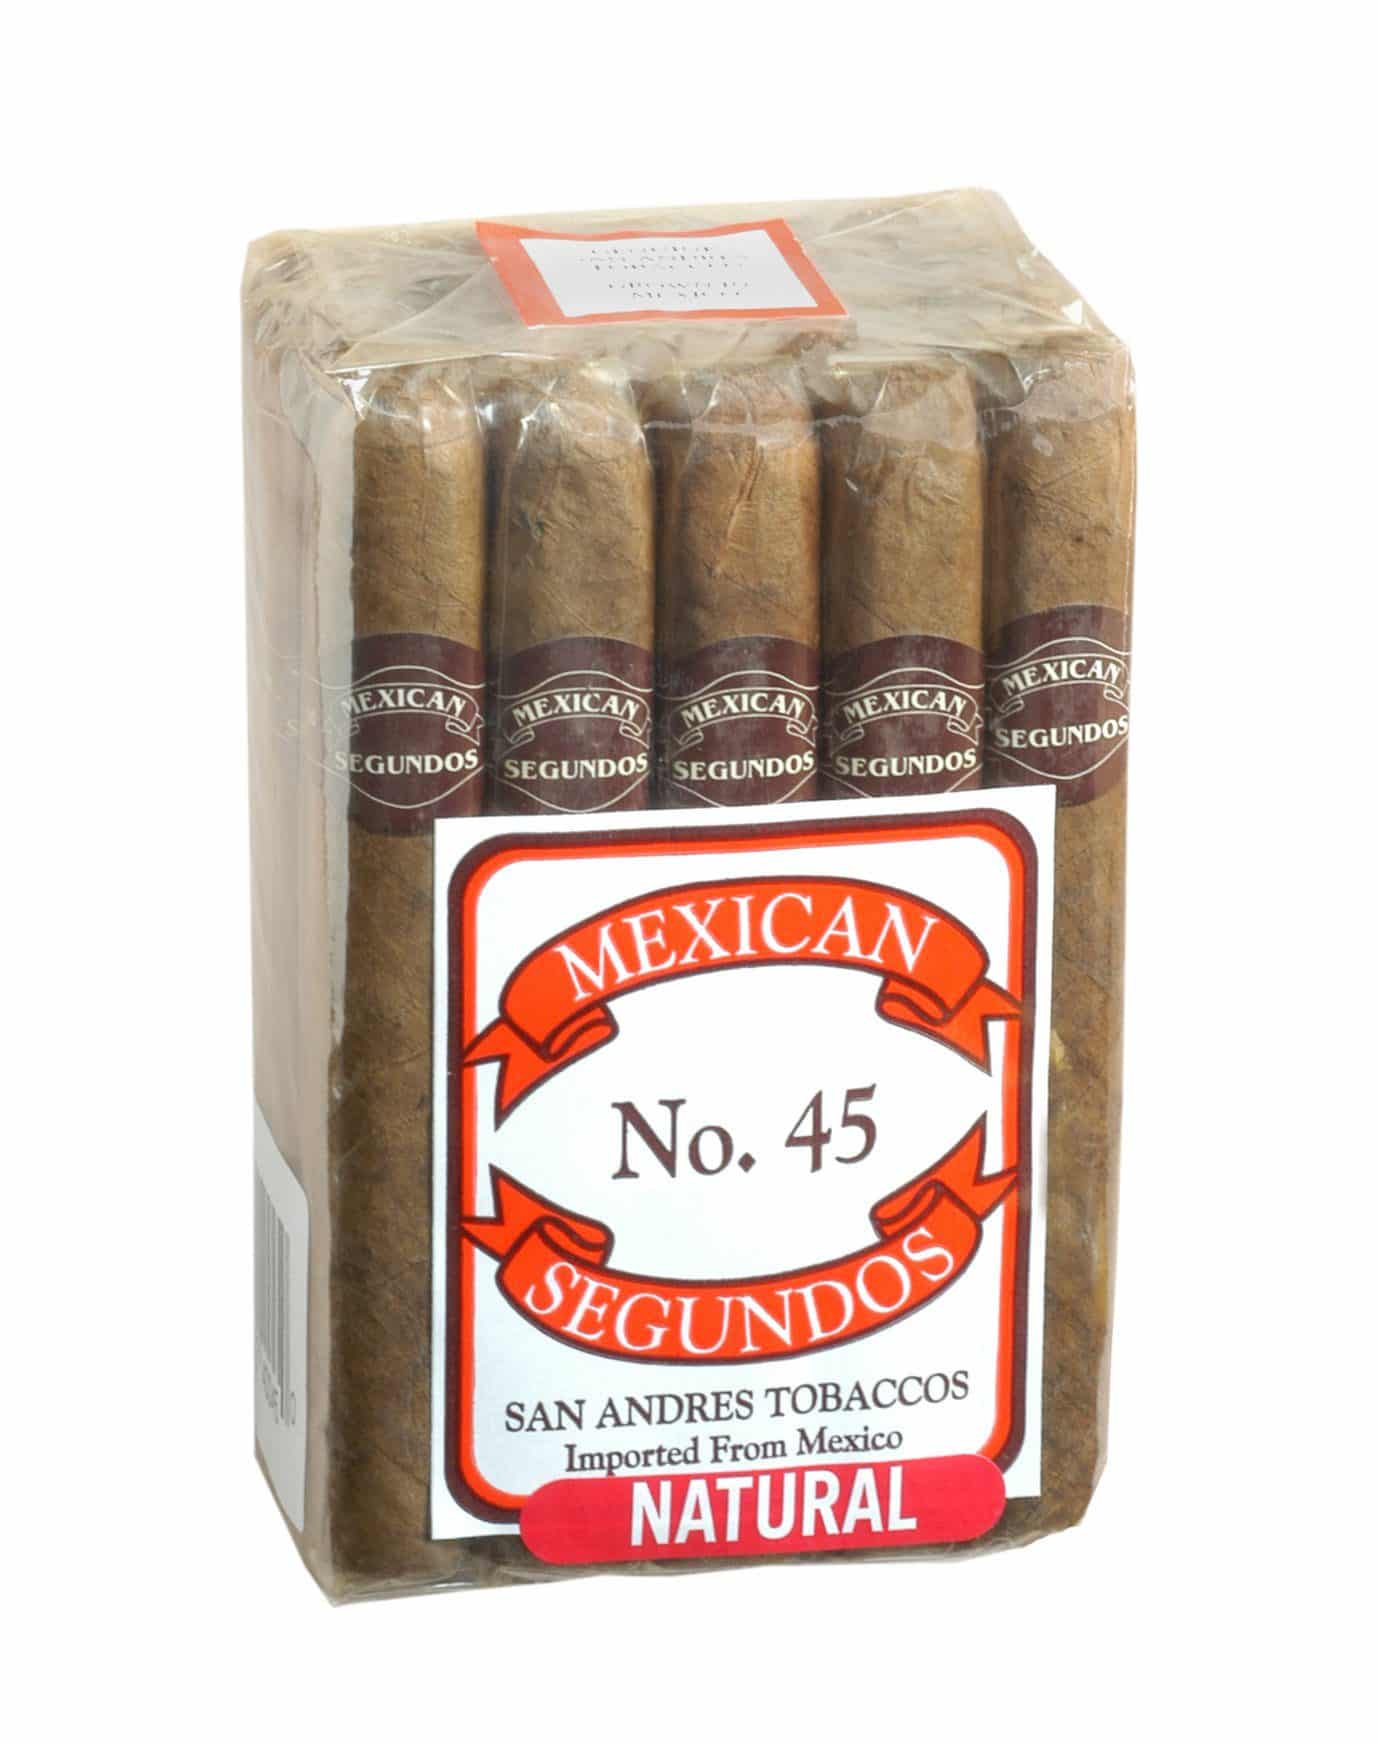 20 count bundle of Mexican Segundos No. 45 Natural cigars